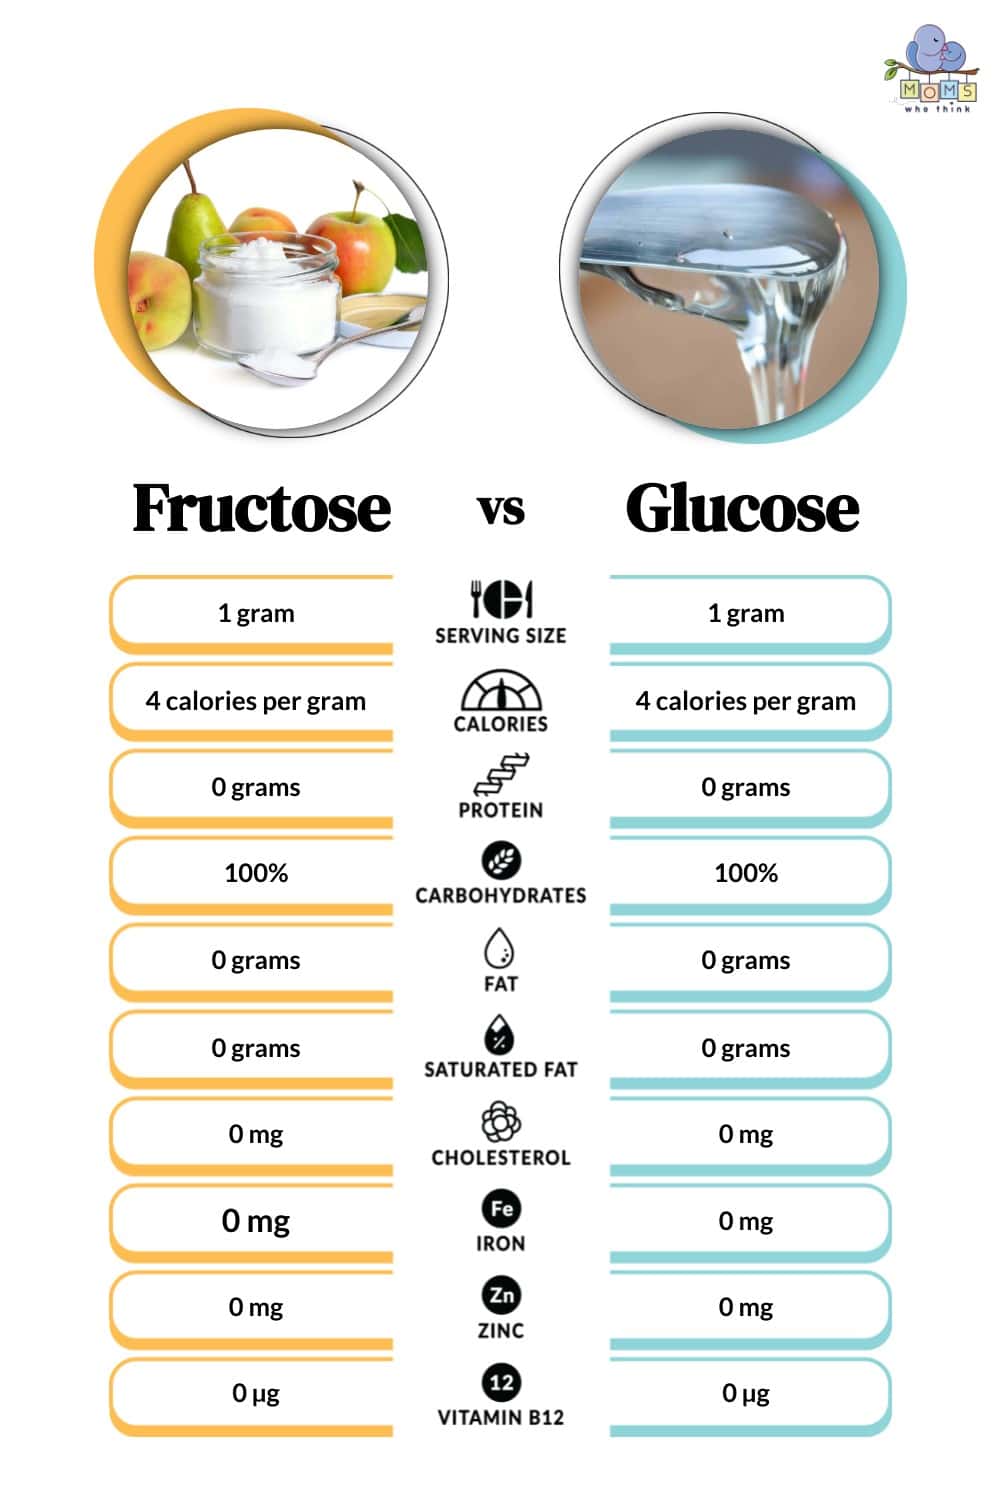 Fructose vs Glucose: Nutrient comparison chart